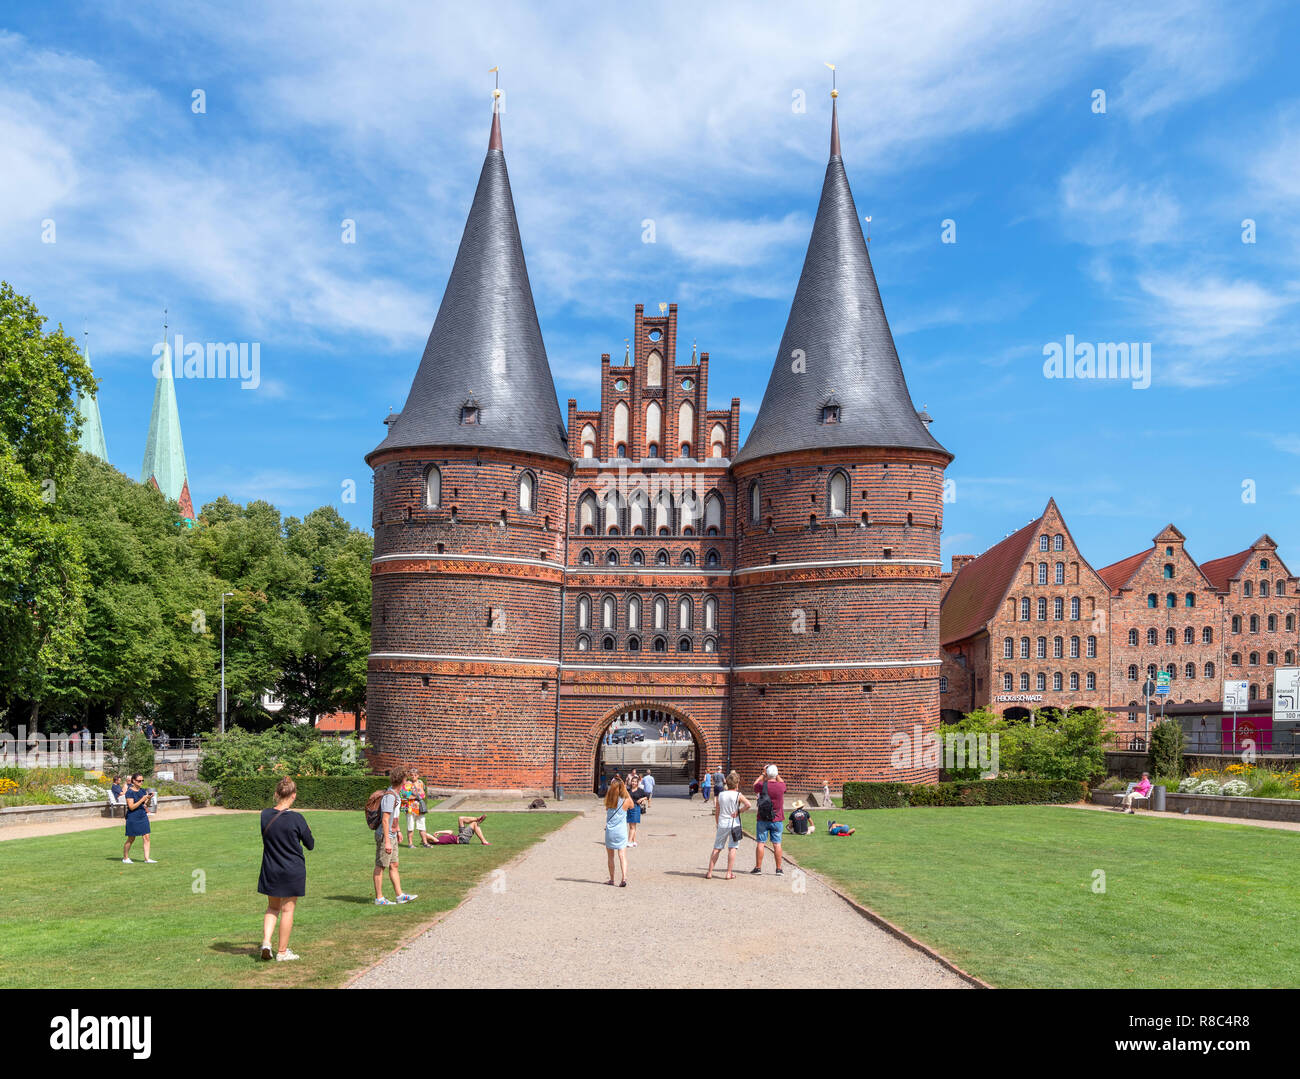 Historique l'Holstentor, 15ème siècle porte de ville, Lubeck, Schleswig-Holstein, Allemagne Banque D'Images